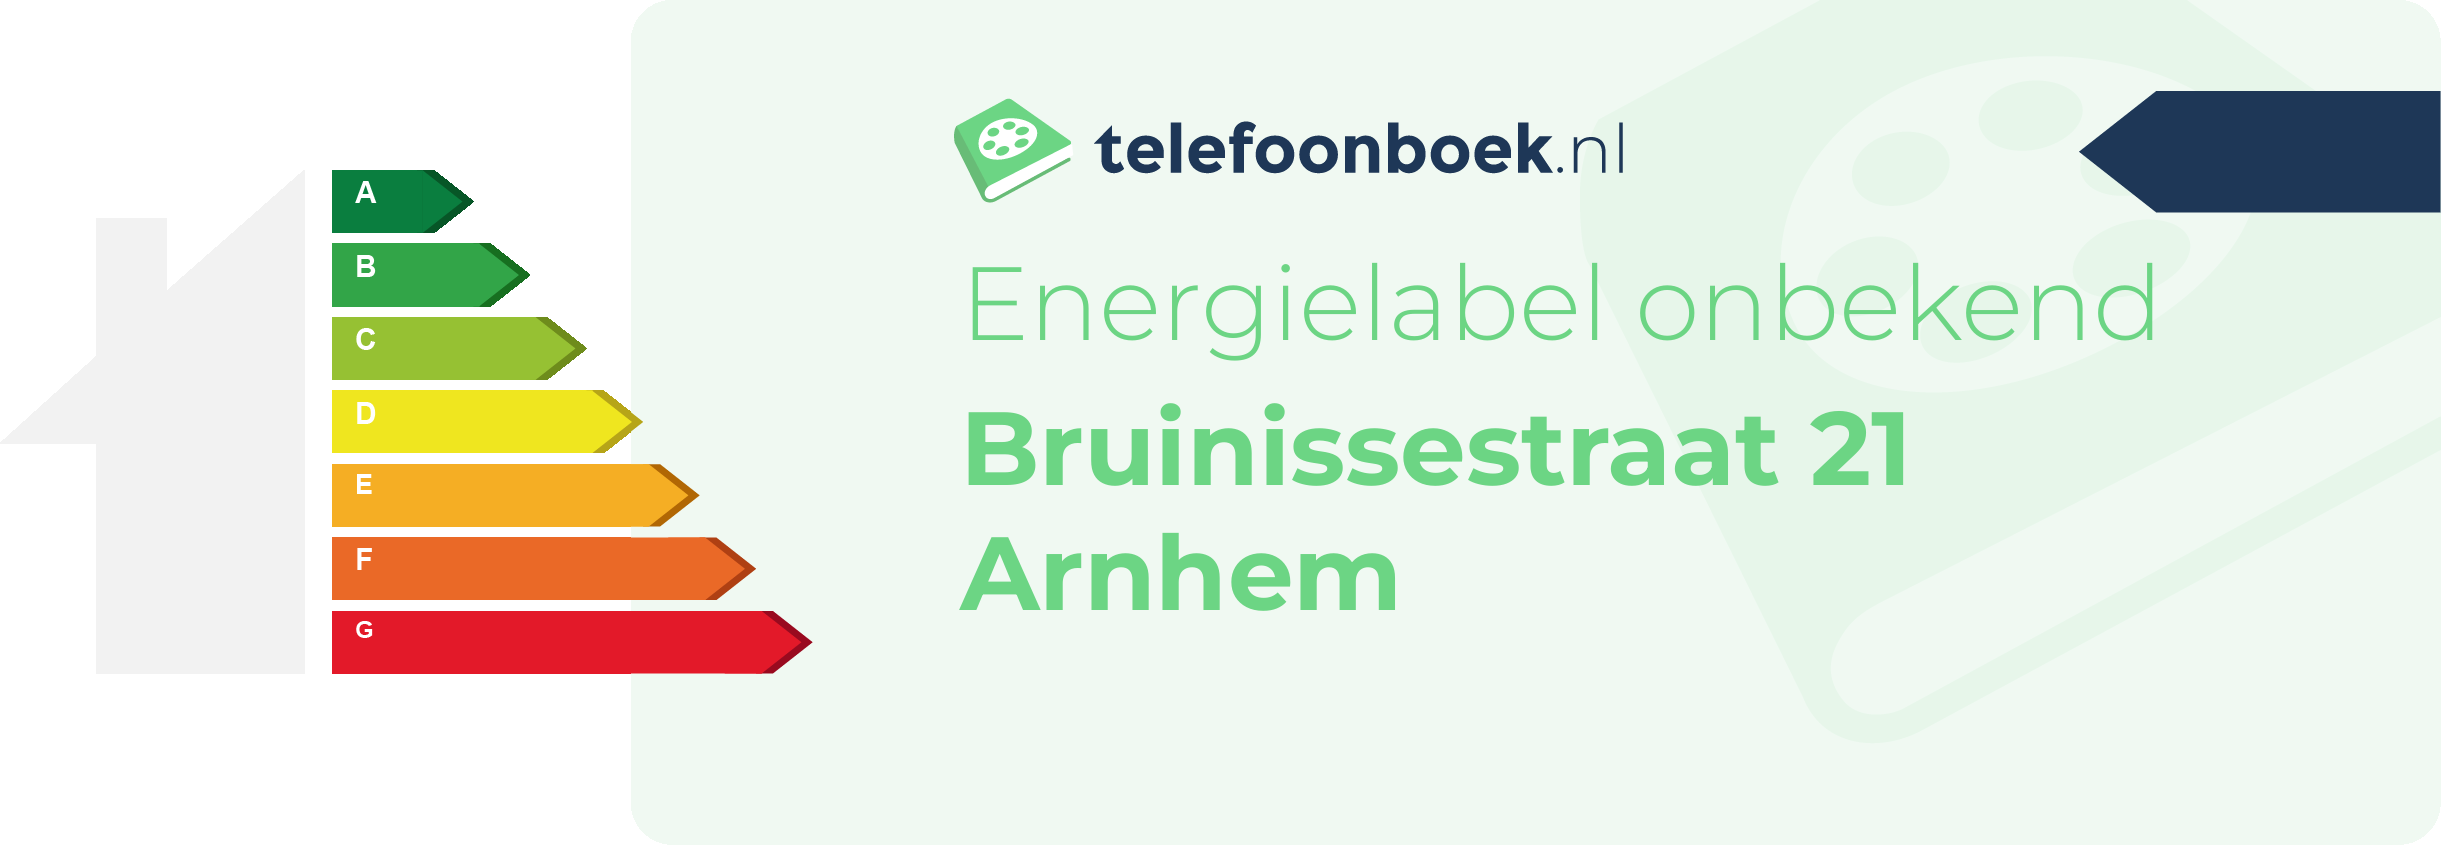 Energielabel Bruinissestraat 21 Arnhem